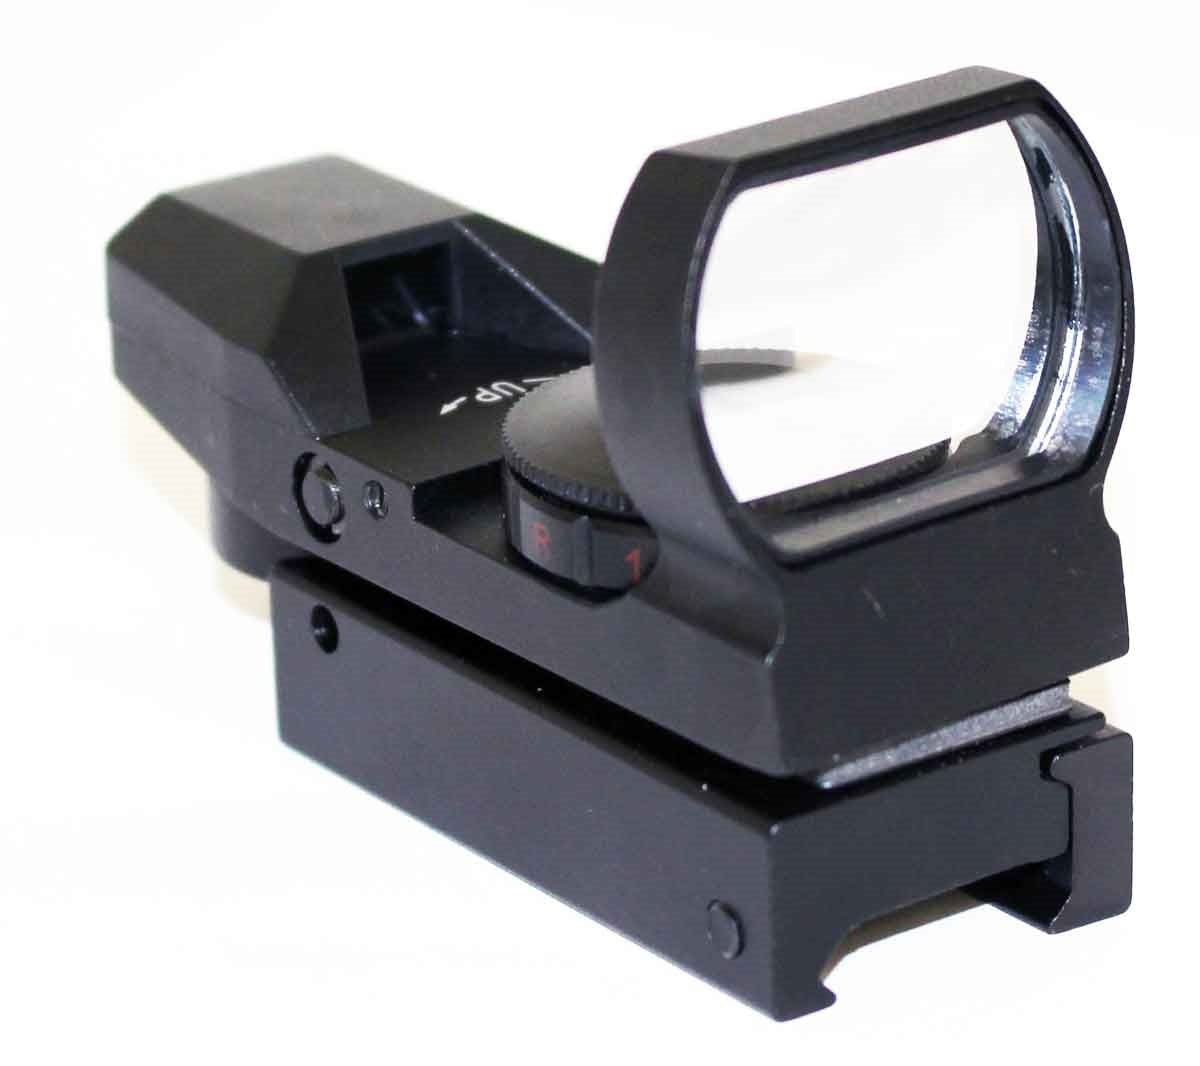 Trinity reflex sight 1x30 for Mossberg 500 ATI Tactical 12 gauge shotgun pump. - TRINITY SUPPLY INC